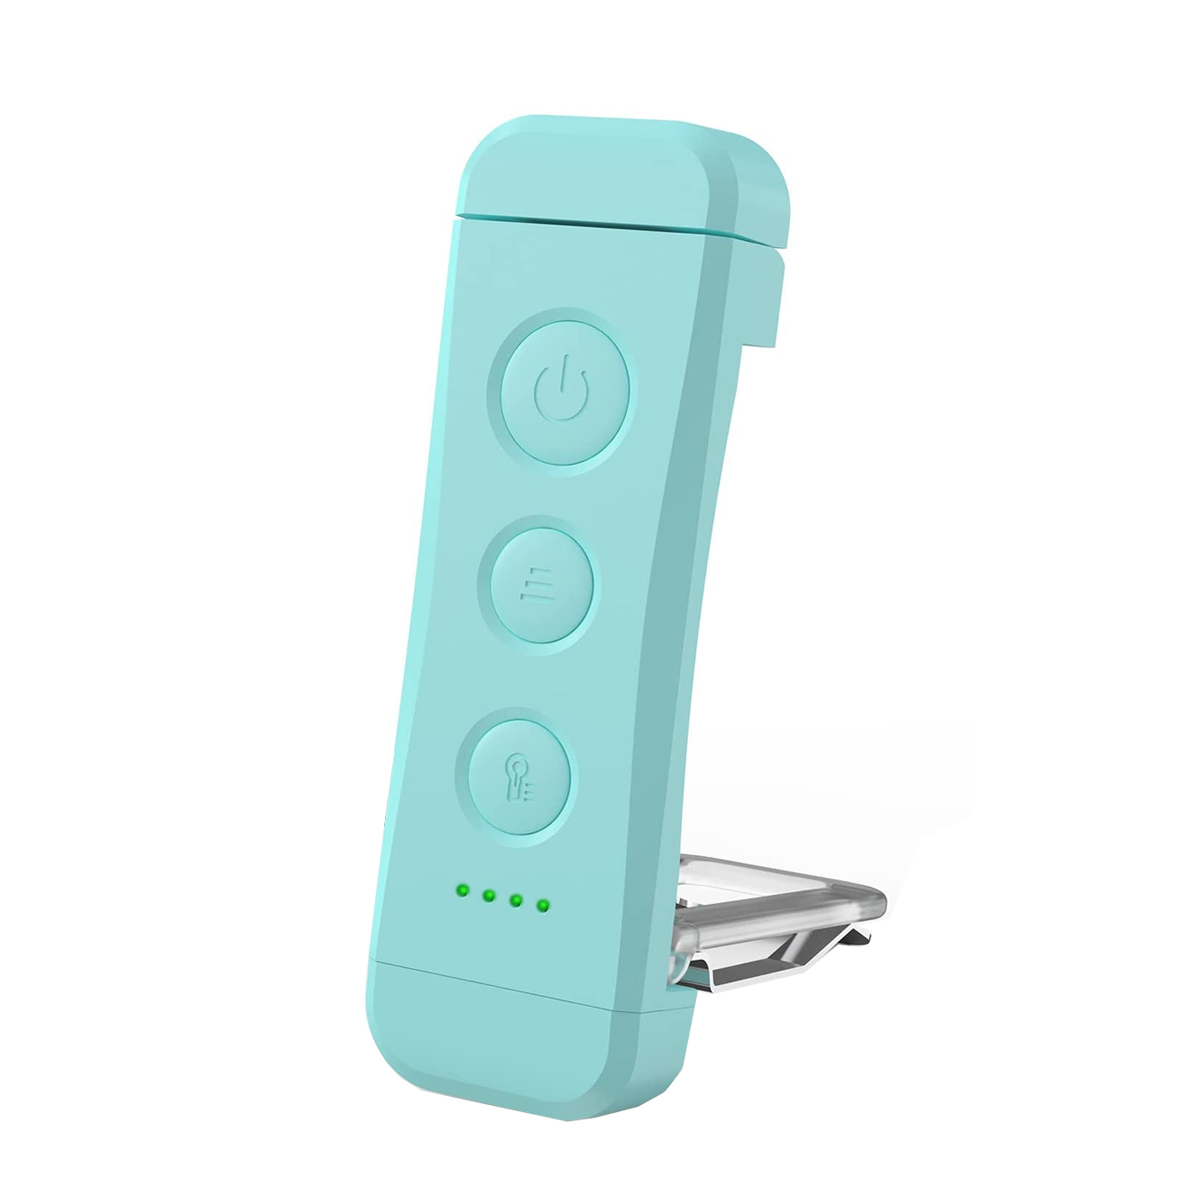 KINSI mini Licht, 5 Farben Drei Helligkeit USB-aufladbare Mini-LED-Buchleuchte, dimmbar Leselampe